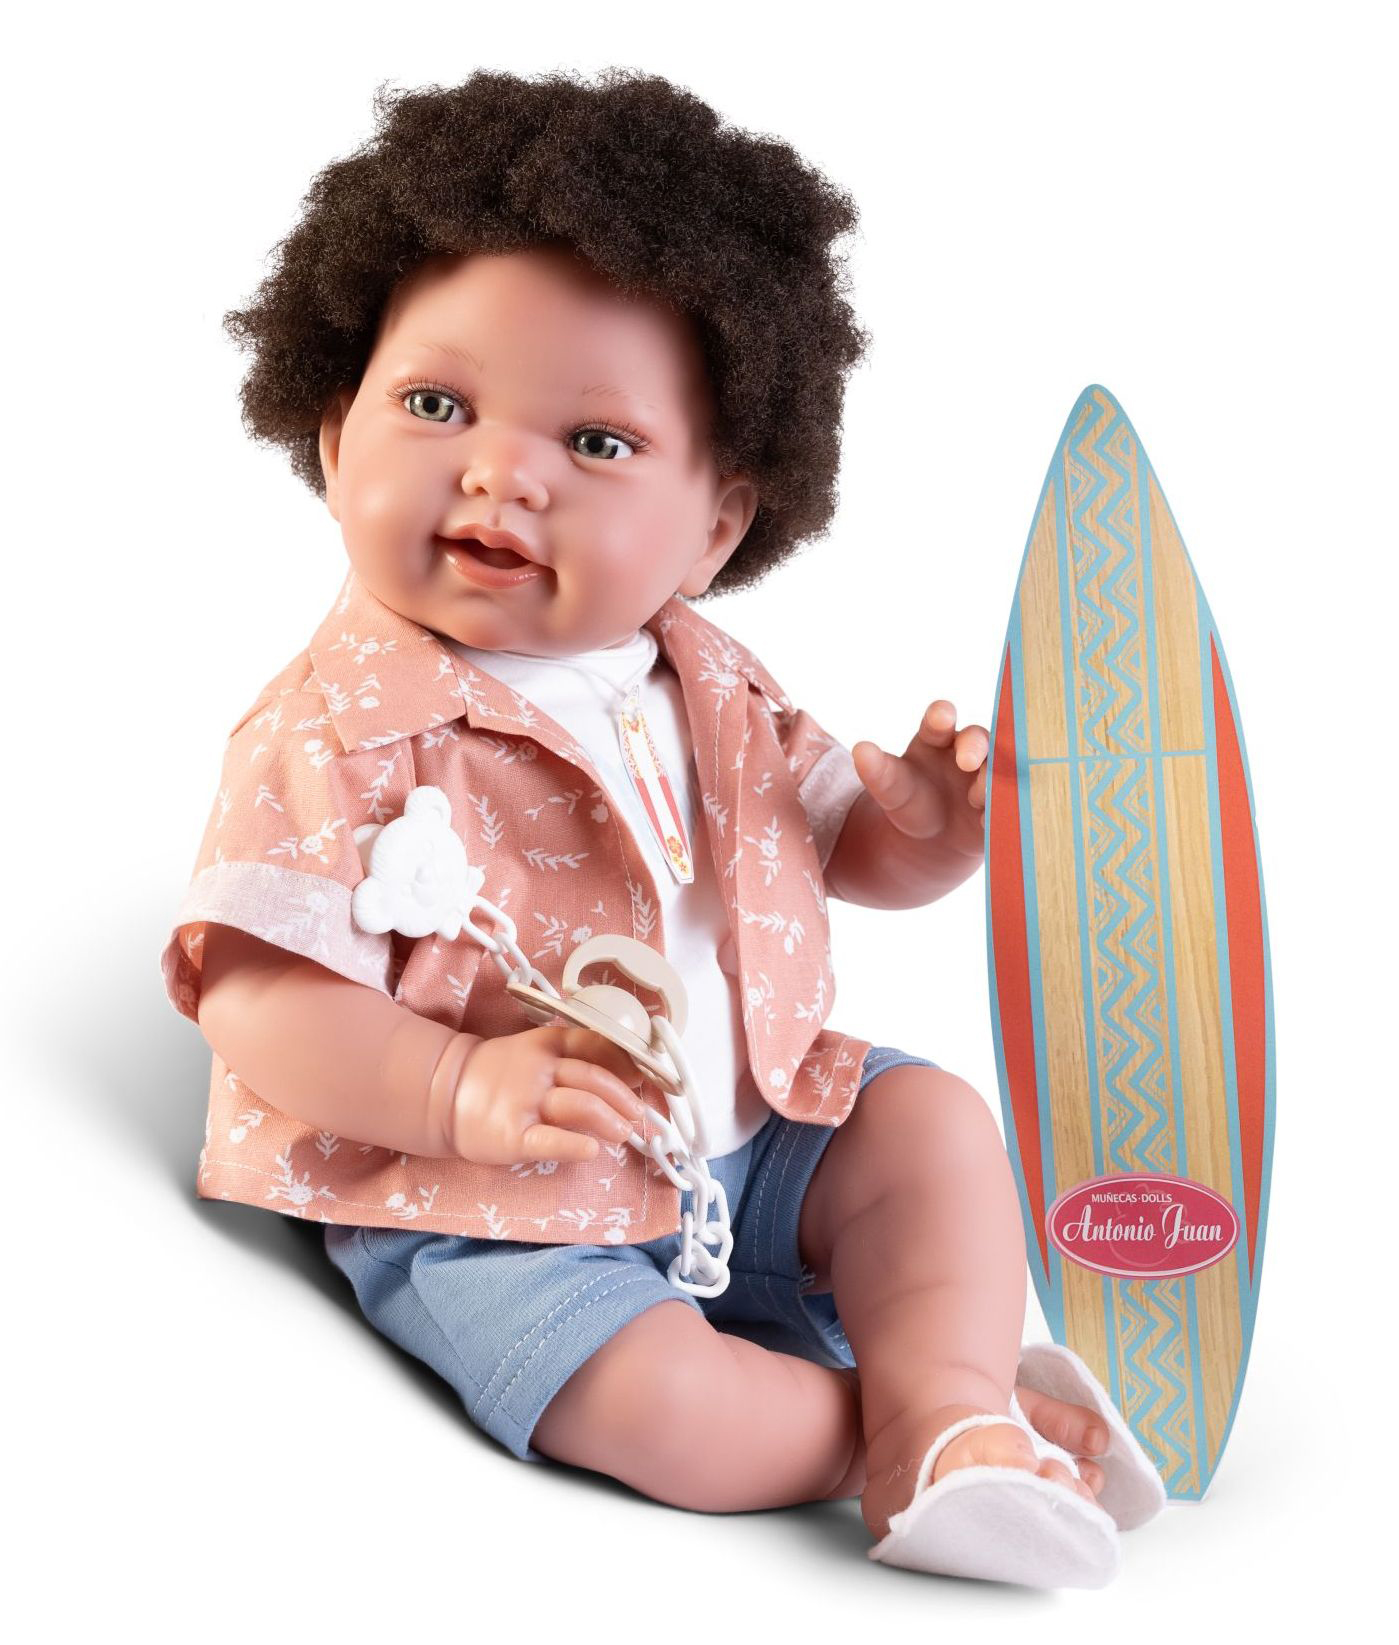 Rappa Antonio Juan 33361 PIPO HAIR -  miminko s měkkým látkovým tělem - 42 cm